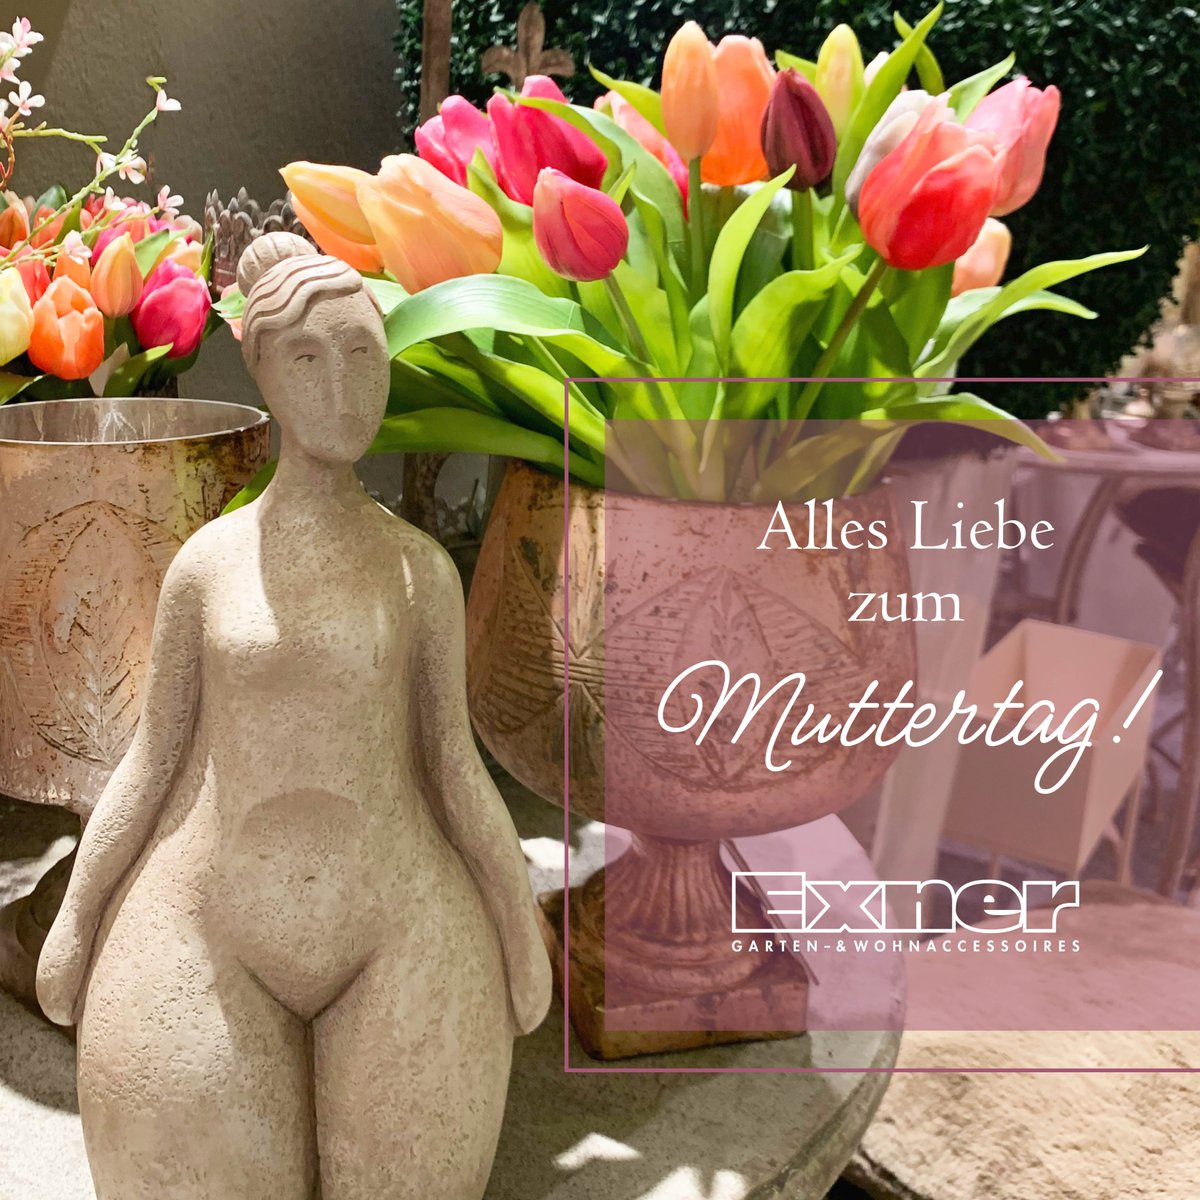 Wir wünschen allen Mamas eine wunderbaren Tag. Lasst euch feiern!

exner-collection.de/html/de/search…

#polyresin #skulptur #sculpture #family #muttertag #muttertagsgeschenk #homestyling #dekoreich #schmuckstück #geschenk #mutterglück #liebe #love #mutterliebe #dekoration #mothersday #mama